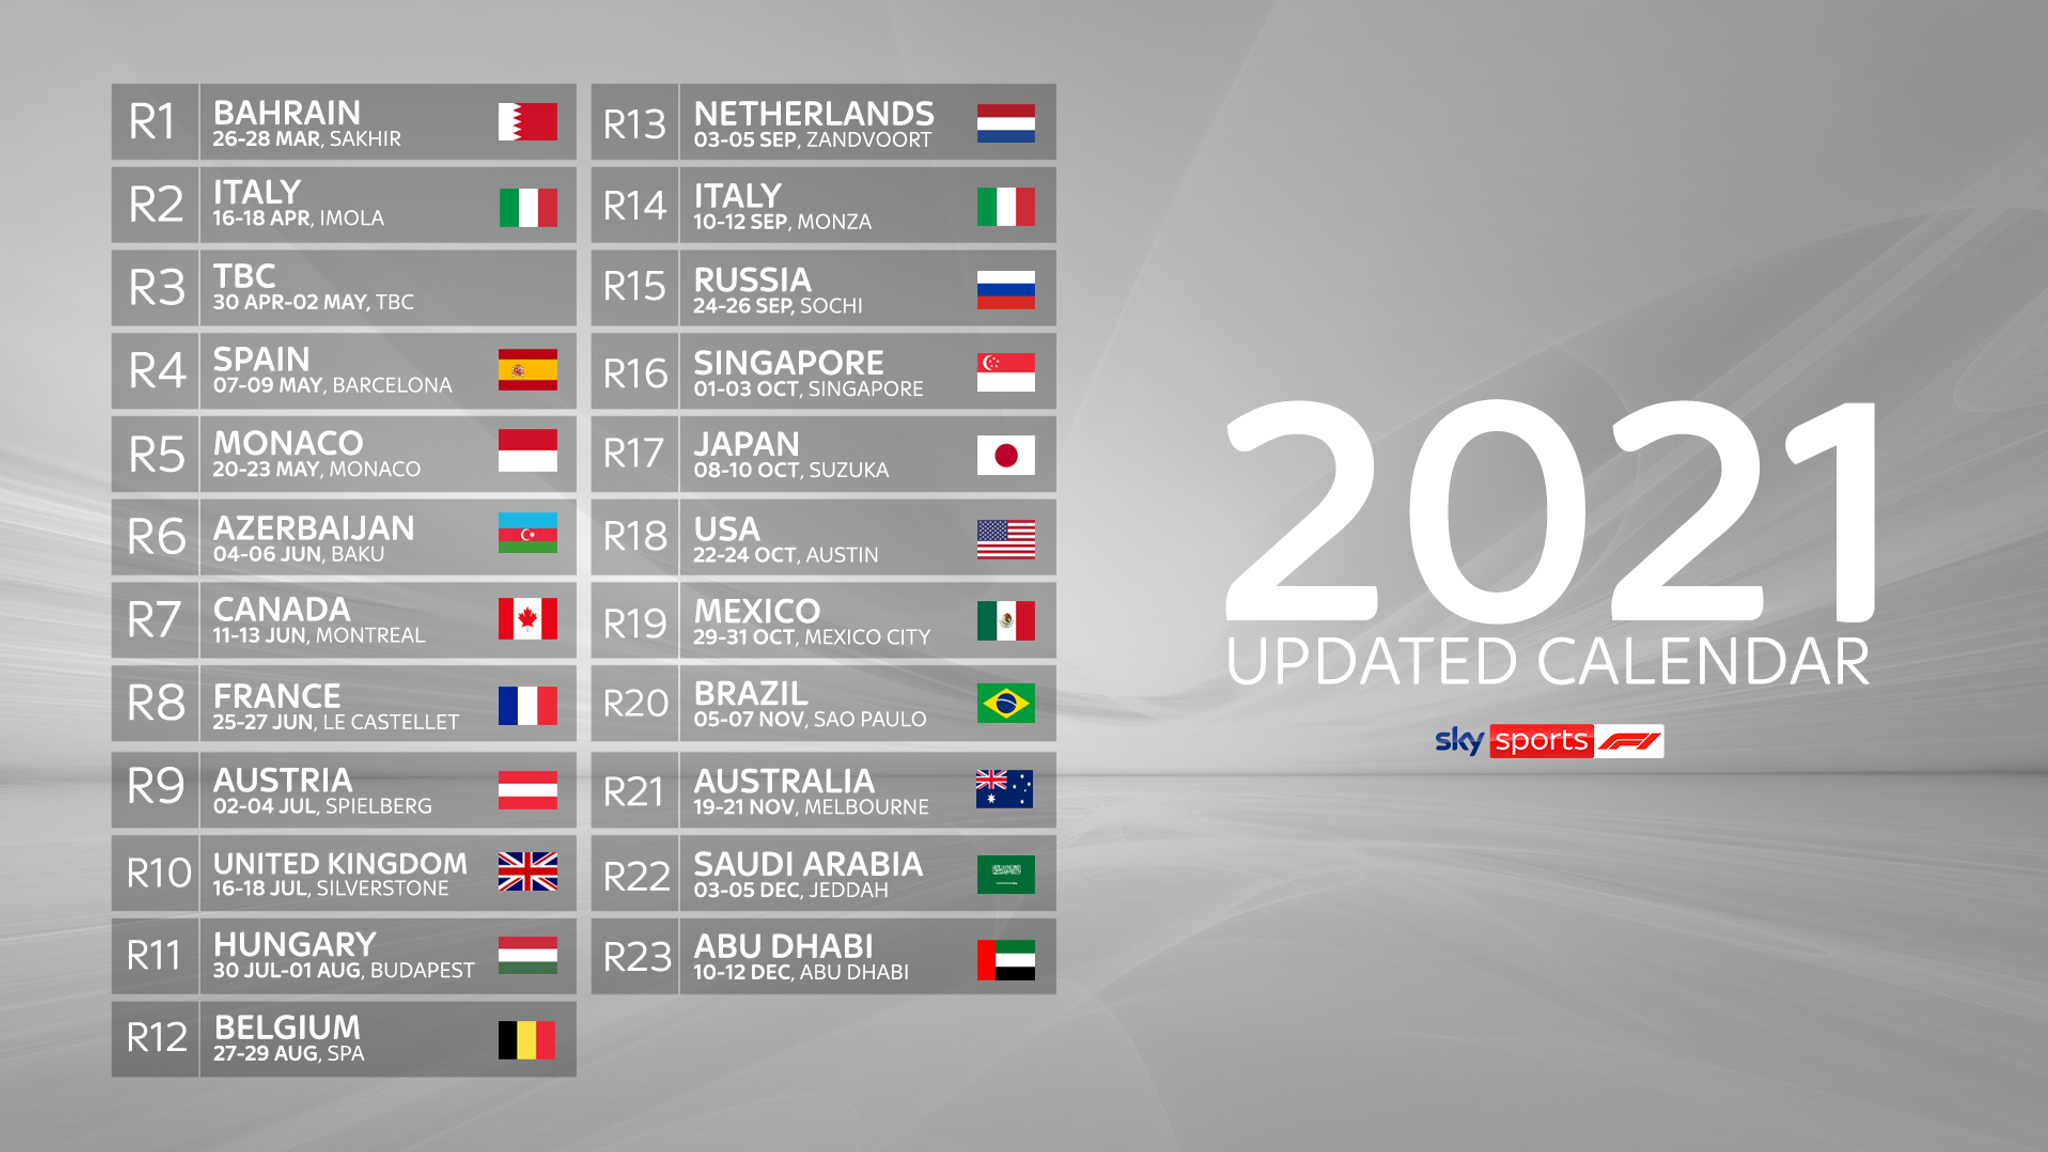 Formula 1 2021 Calendar Formula 1 In 2021 Revised Calendar For Record 23 Race Season Revealed F1 News